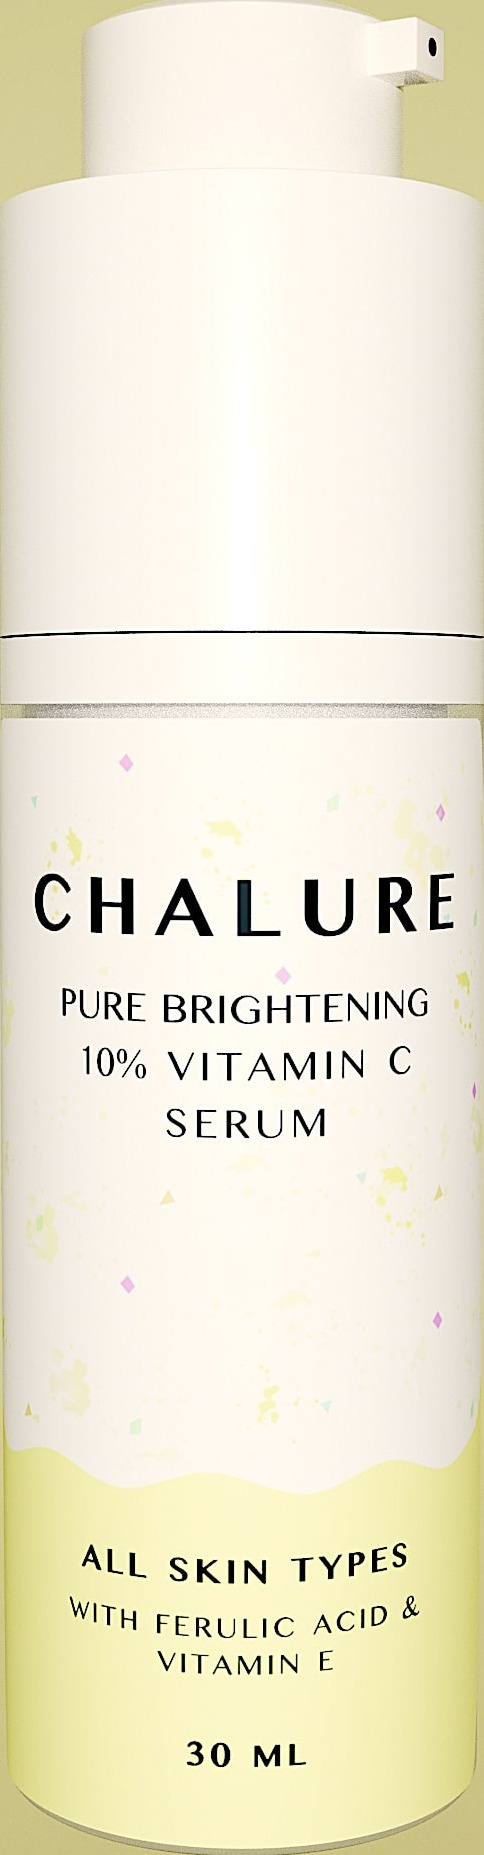 Chalure Pure Brightening 10% Vitamin C Serum With Ferulic Acid & Vitamin E